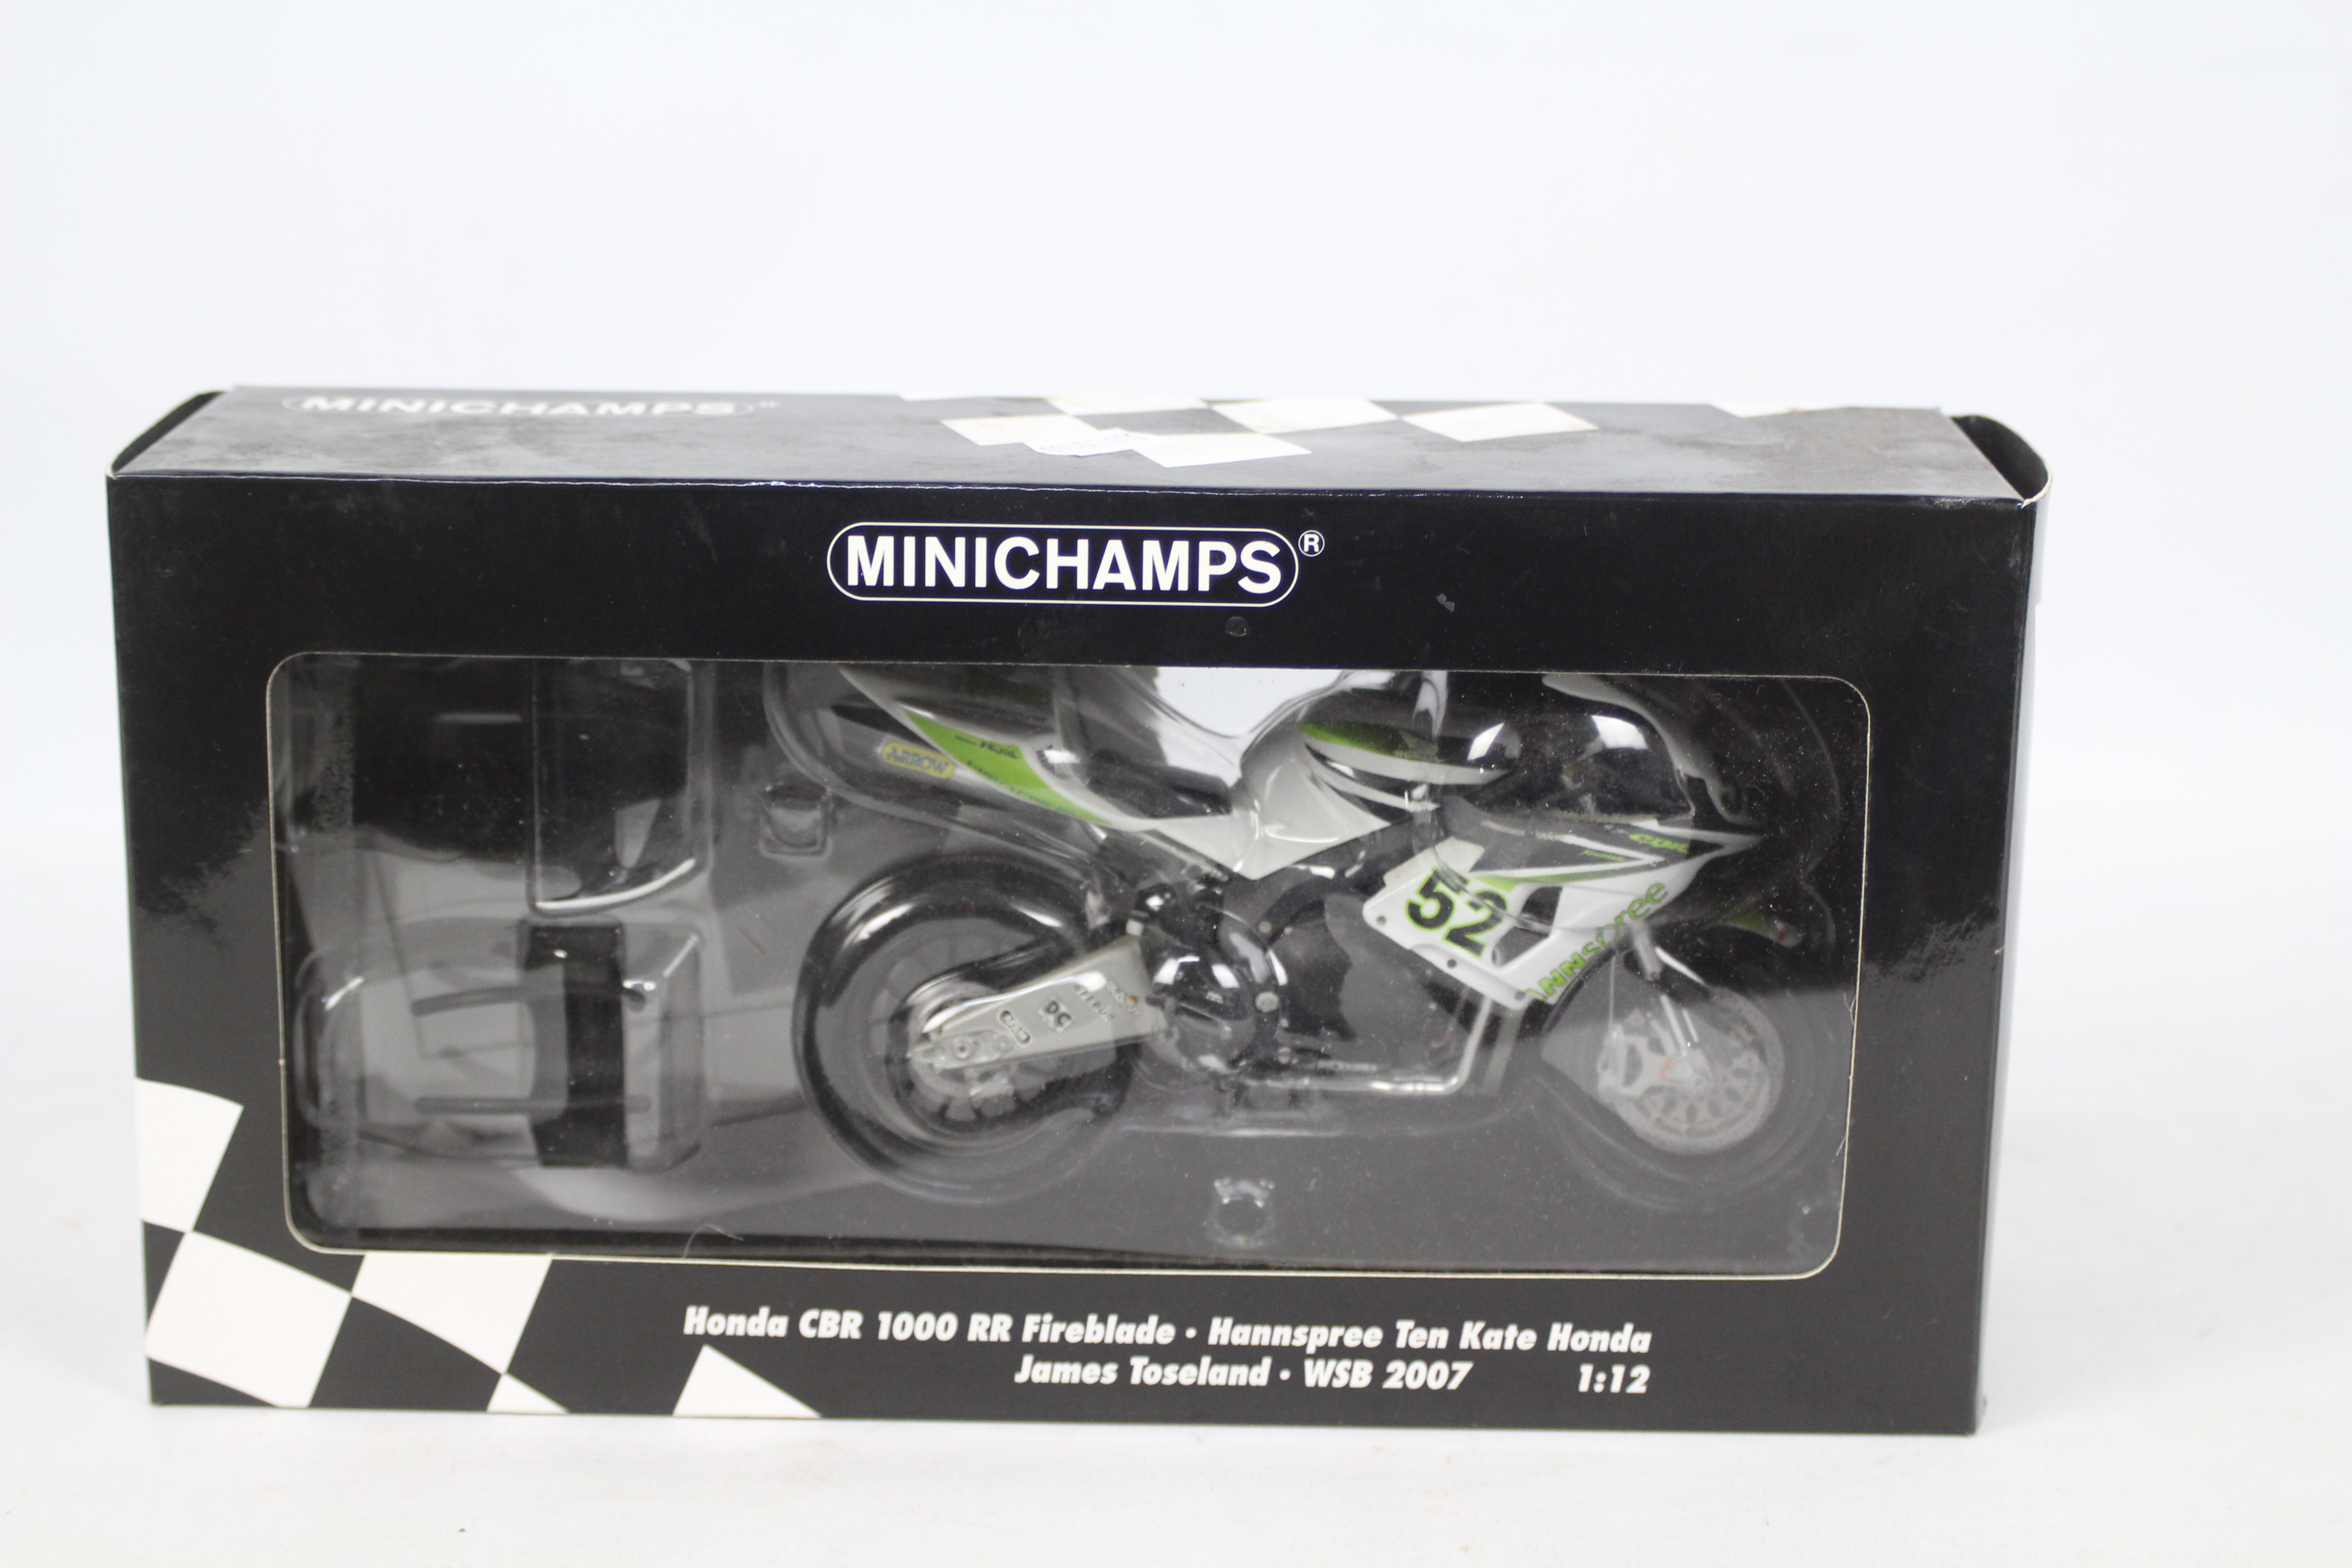 Minichamps - A boxed Minichamps #1220712252 HondaCBR 1000 RR Fireblade ,